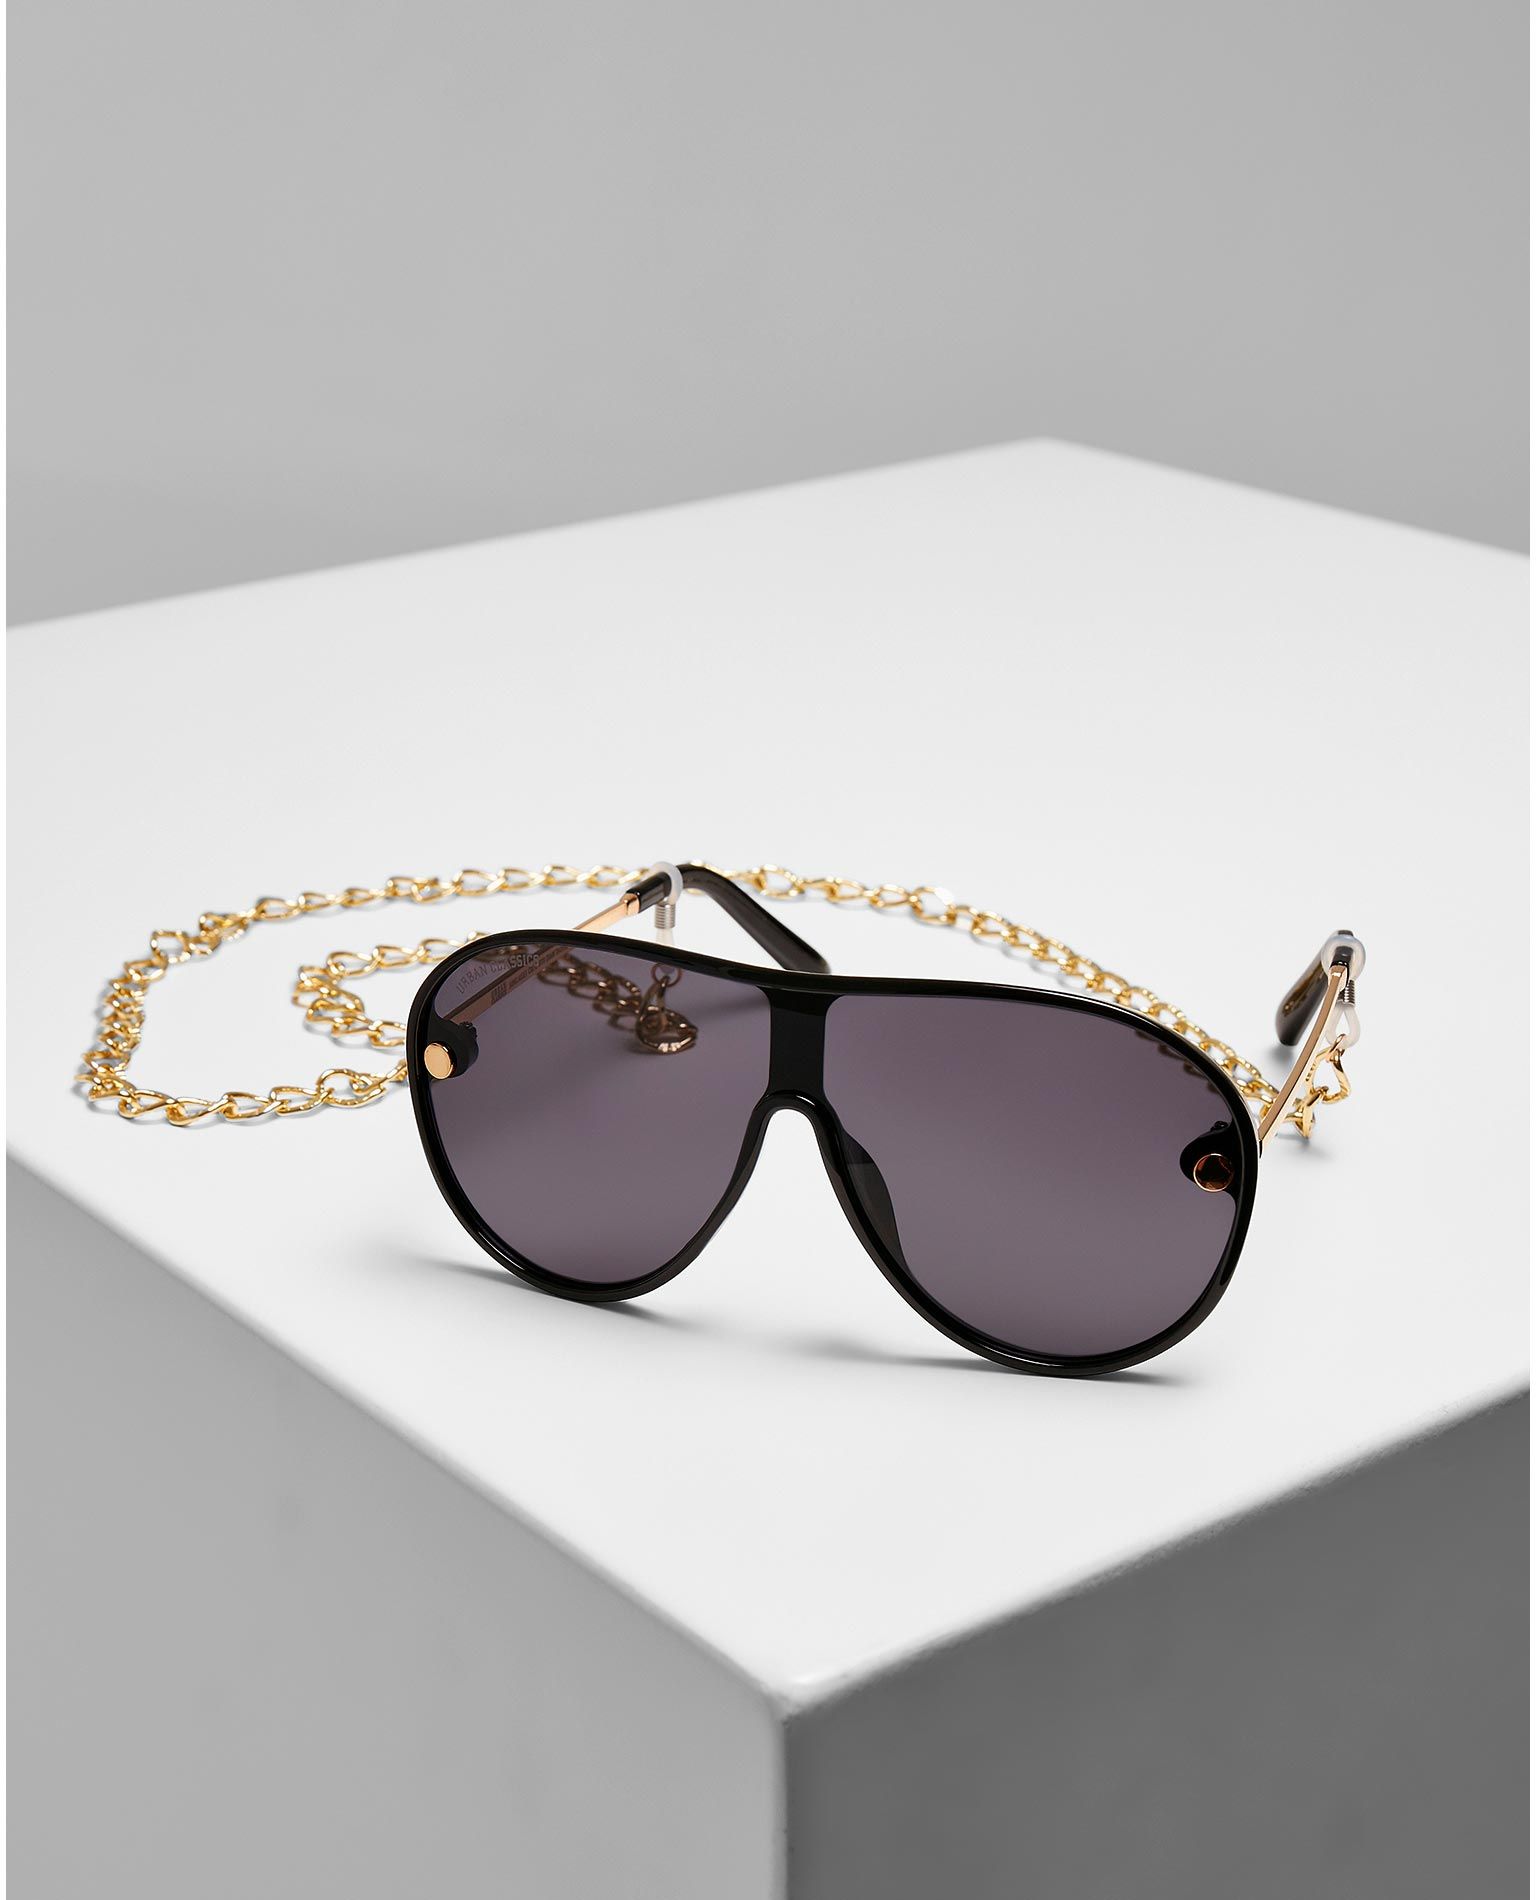 Naxos With Chain Classics Sunglasses Urban